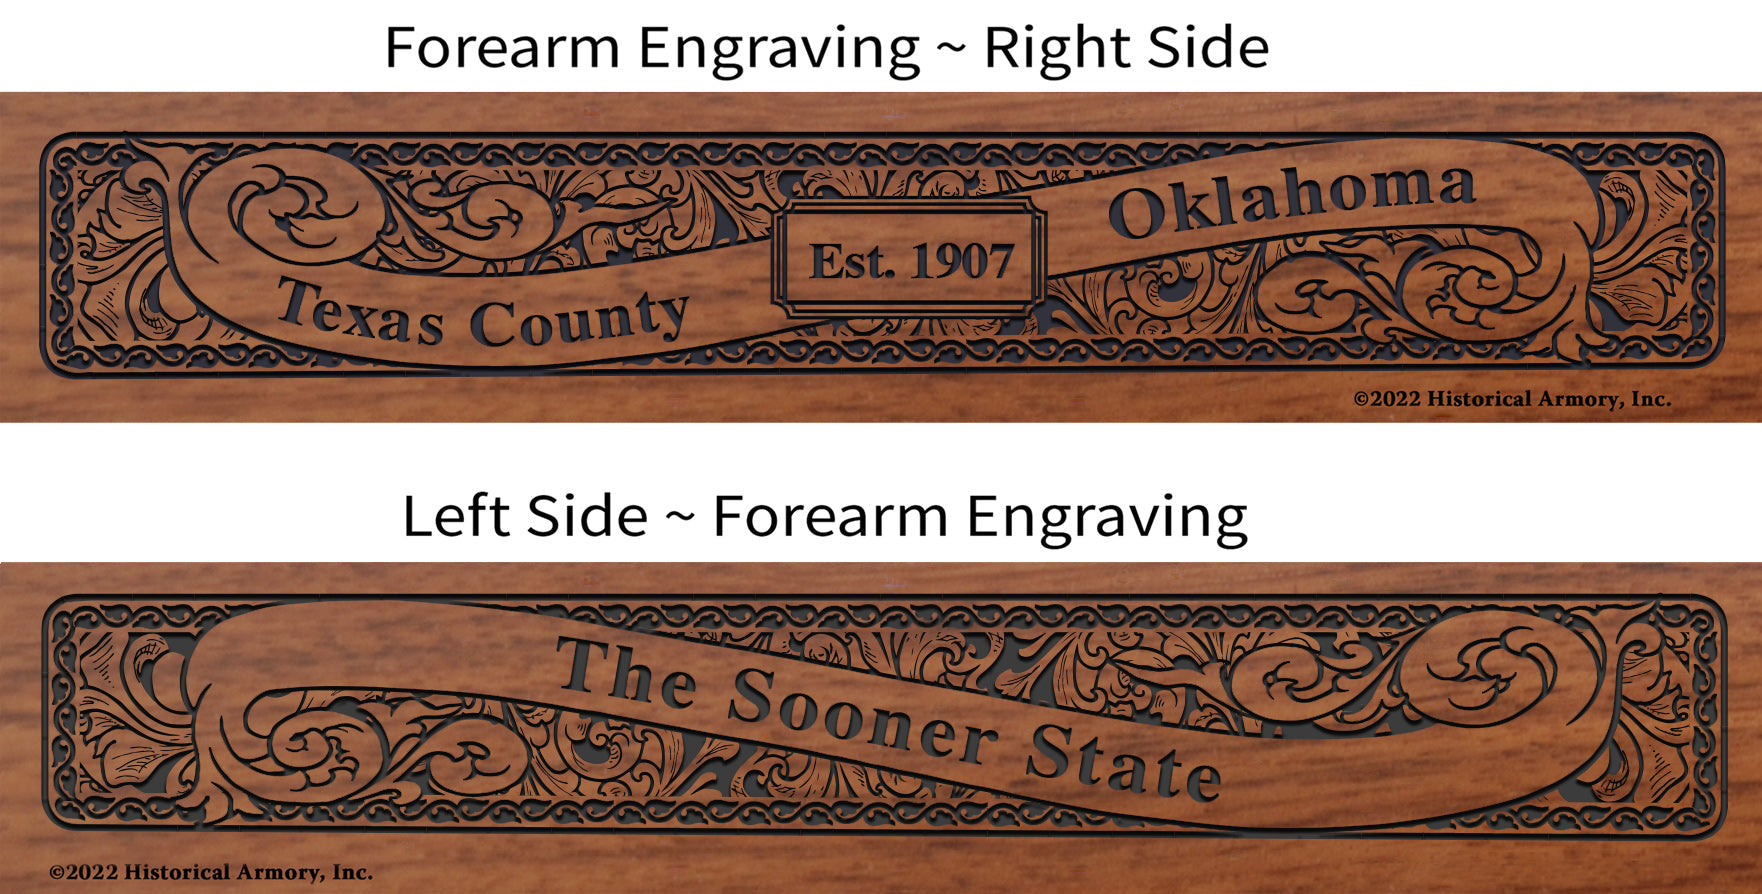 Texas County Oklahoma Engraved Rifle Forearm